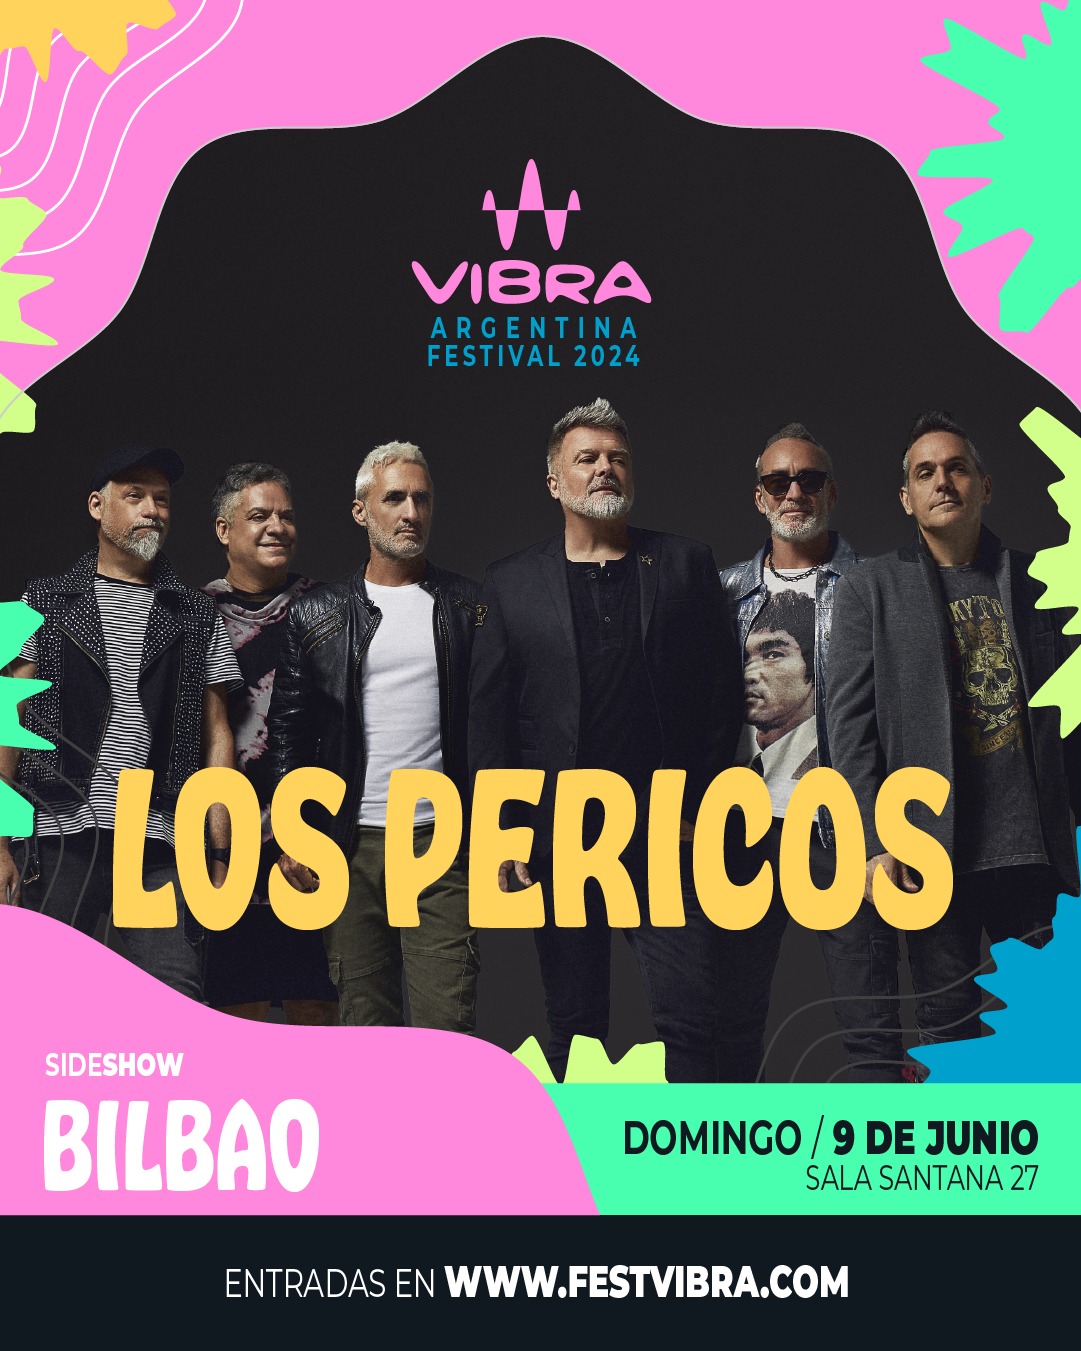 VIBRA ARGENTINA FESTIVAL 2024 en BILBAO, sala Santana 27, Domingo 9 Junio Los Pericos. Entradas y Info: www.festvibra.com